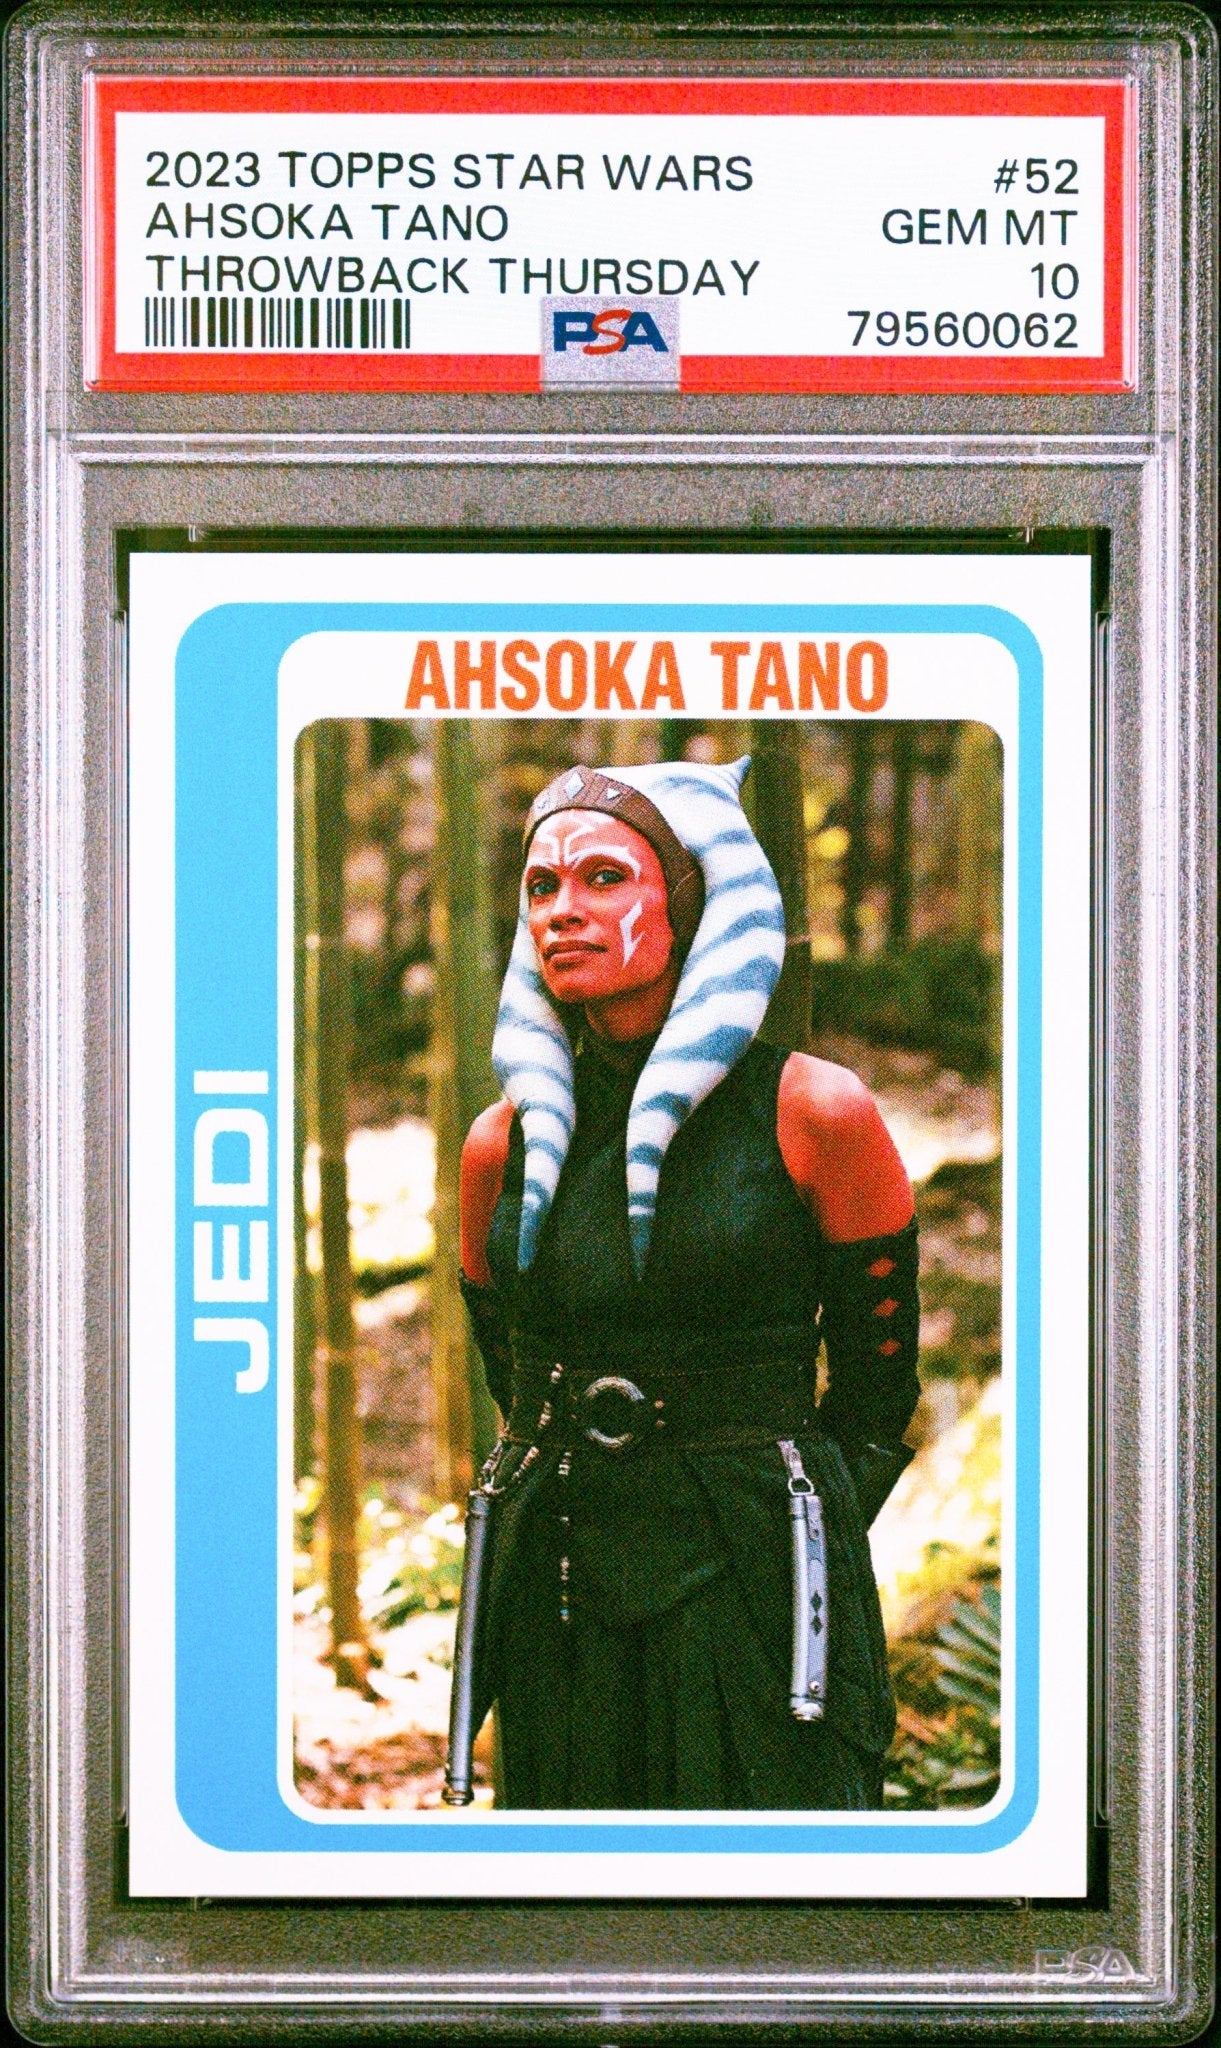 AHSOKA TANO PSA 10 2023 Topps Star Wars Throwback Thursday TBT #52 C4 Star Wars Base Graded Cards - Hobby Gems